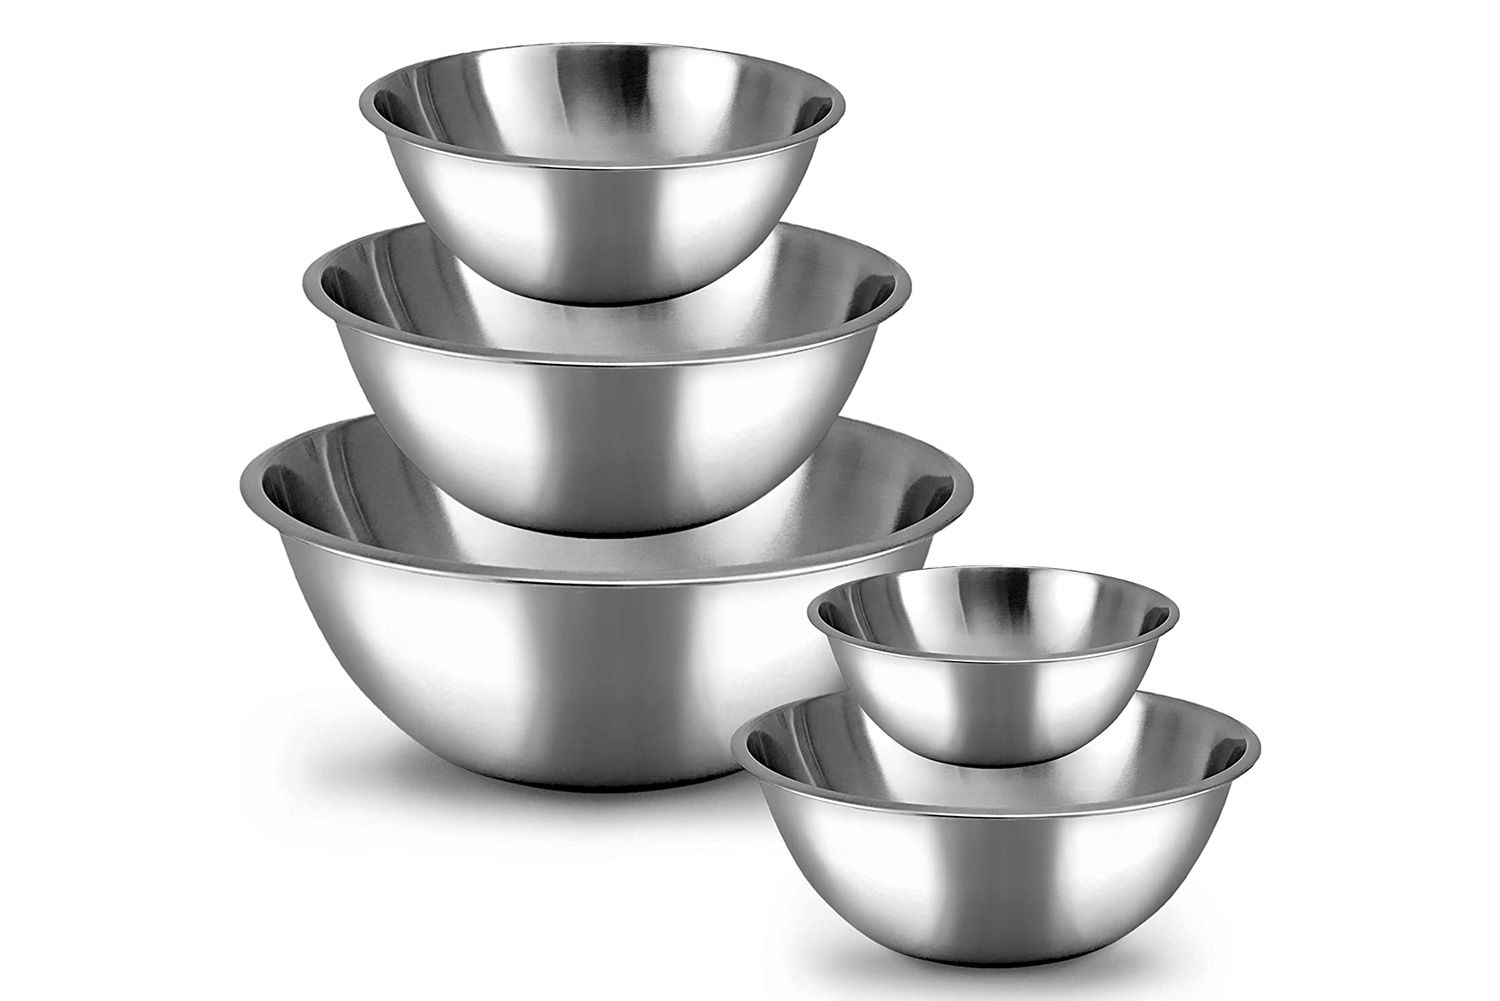 WHYSKO Stainless Steel Mixing Bowls Set